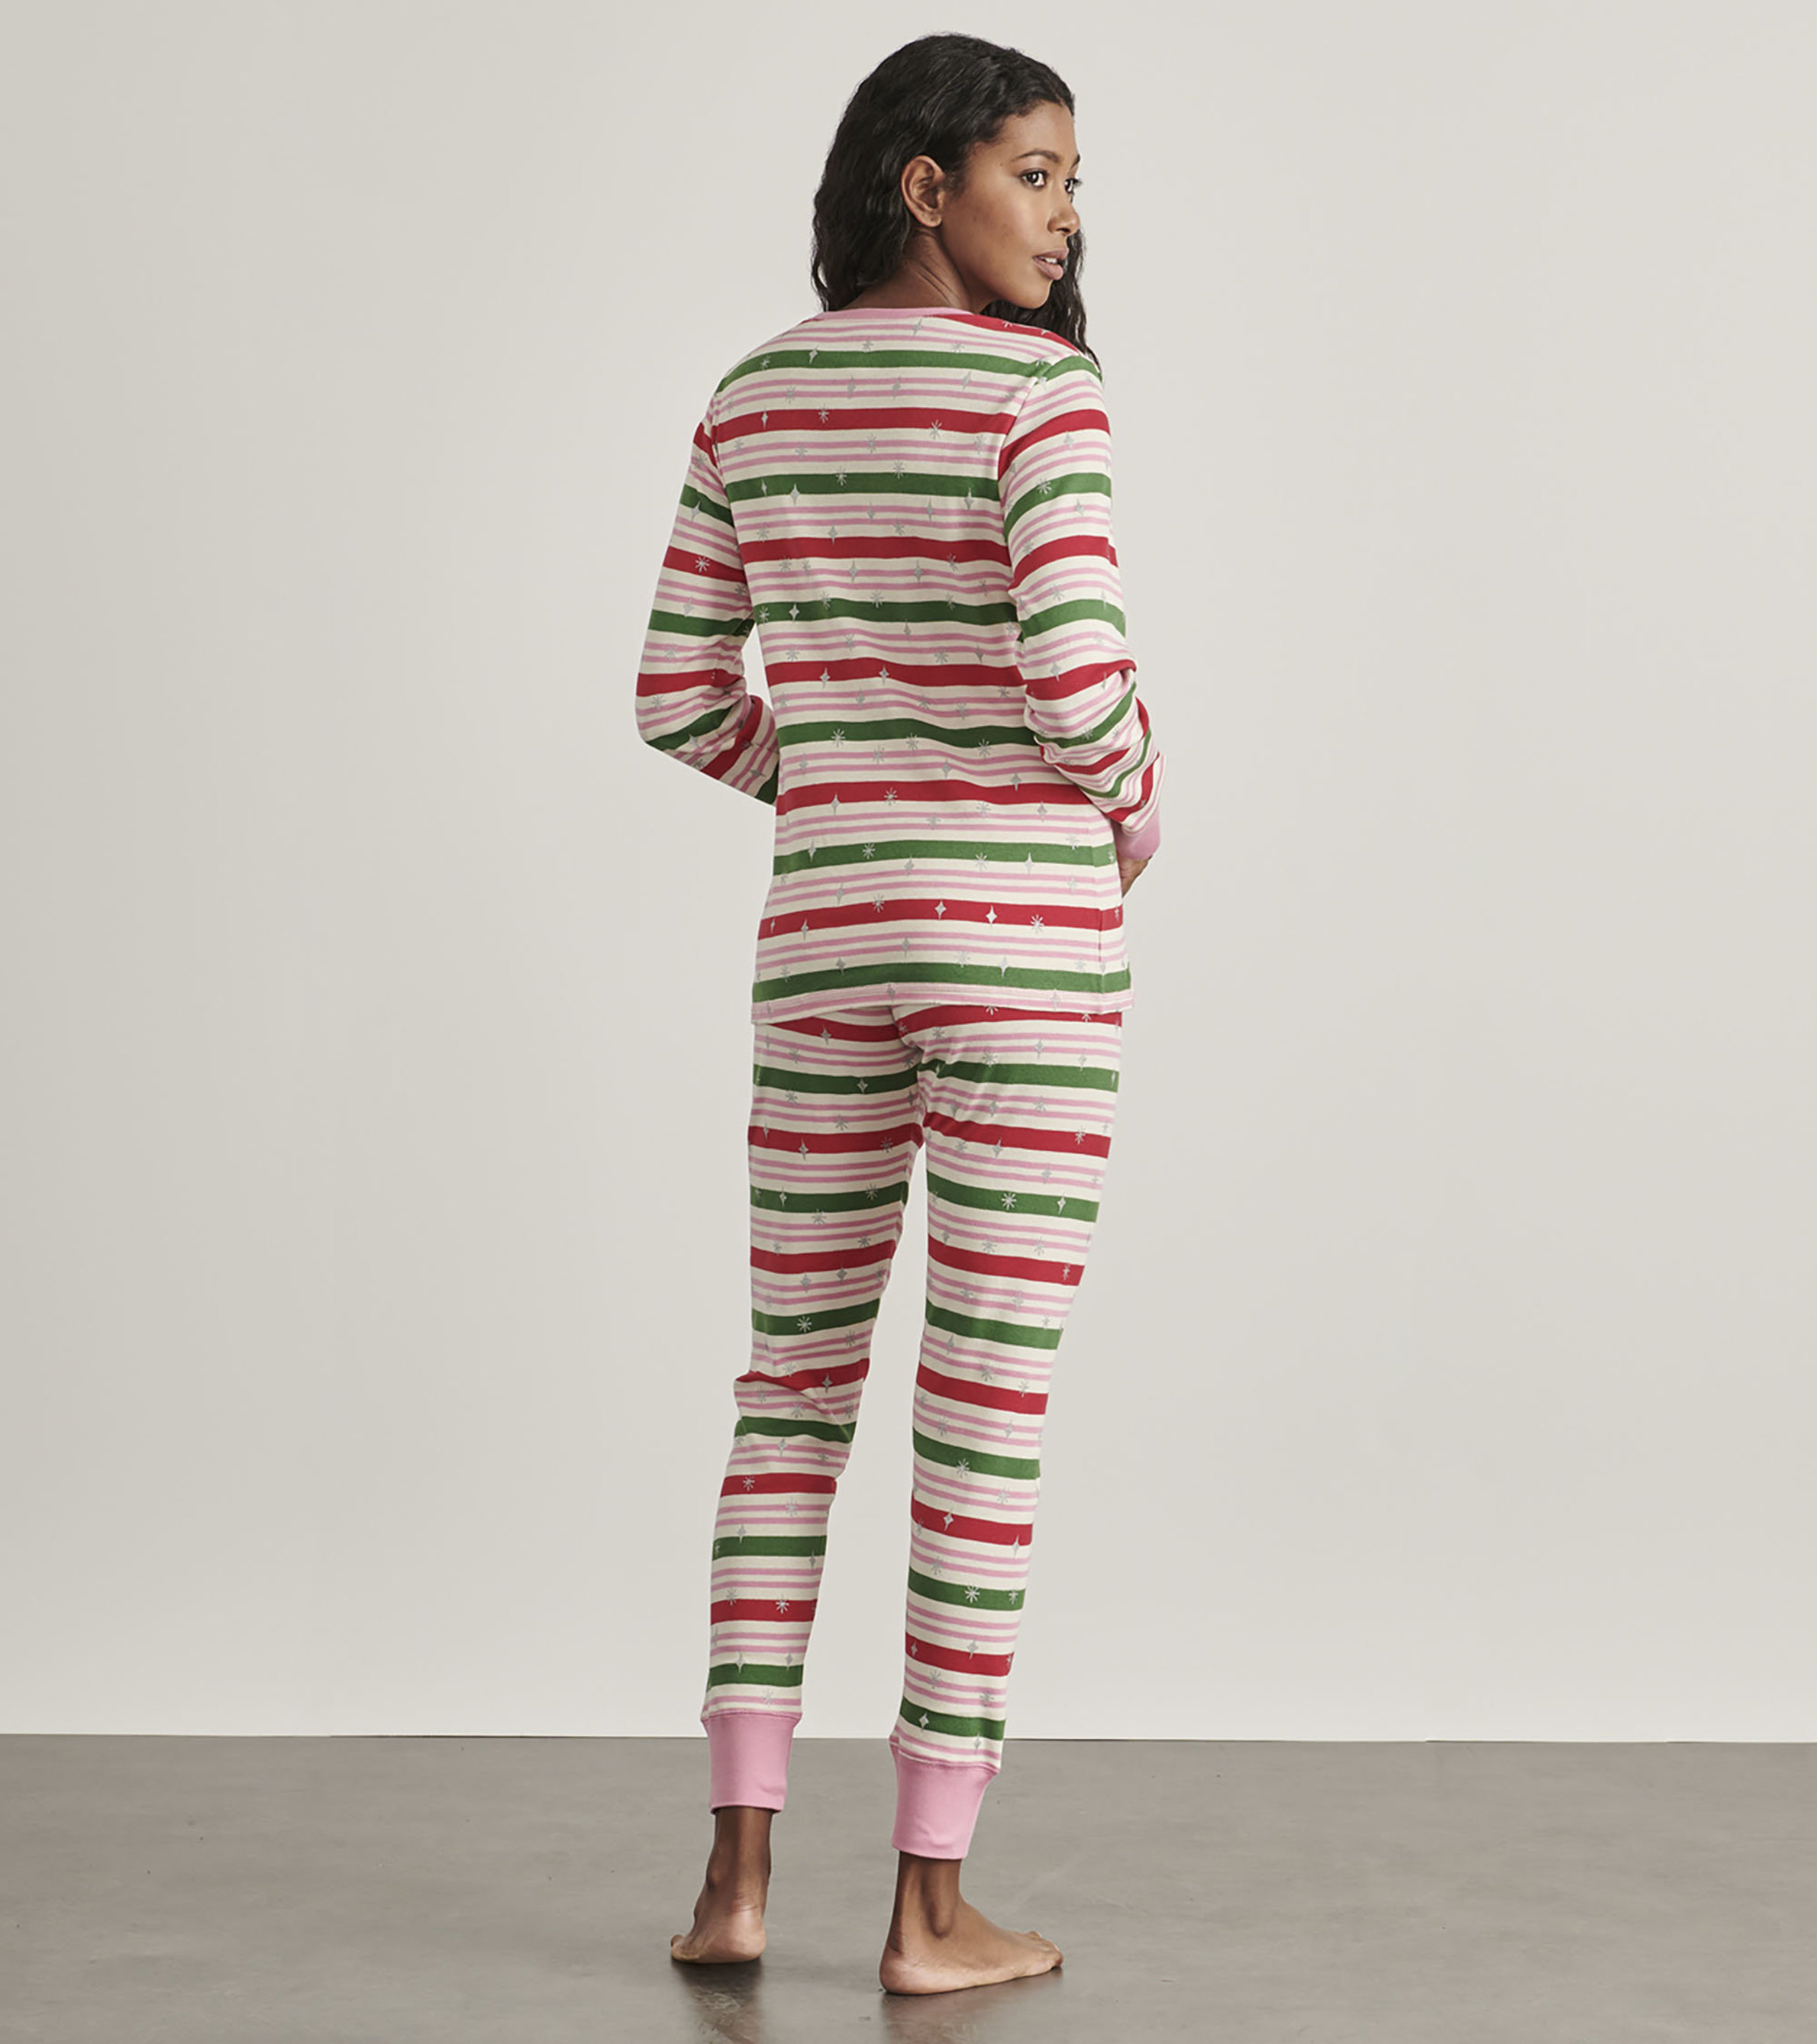 Candy Stripes Women's Pajama Set - Hatley UK